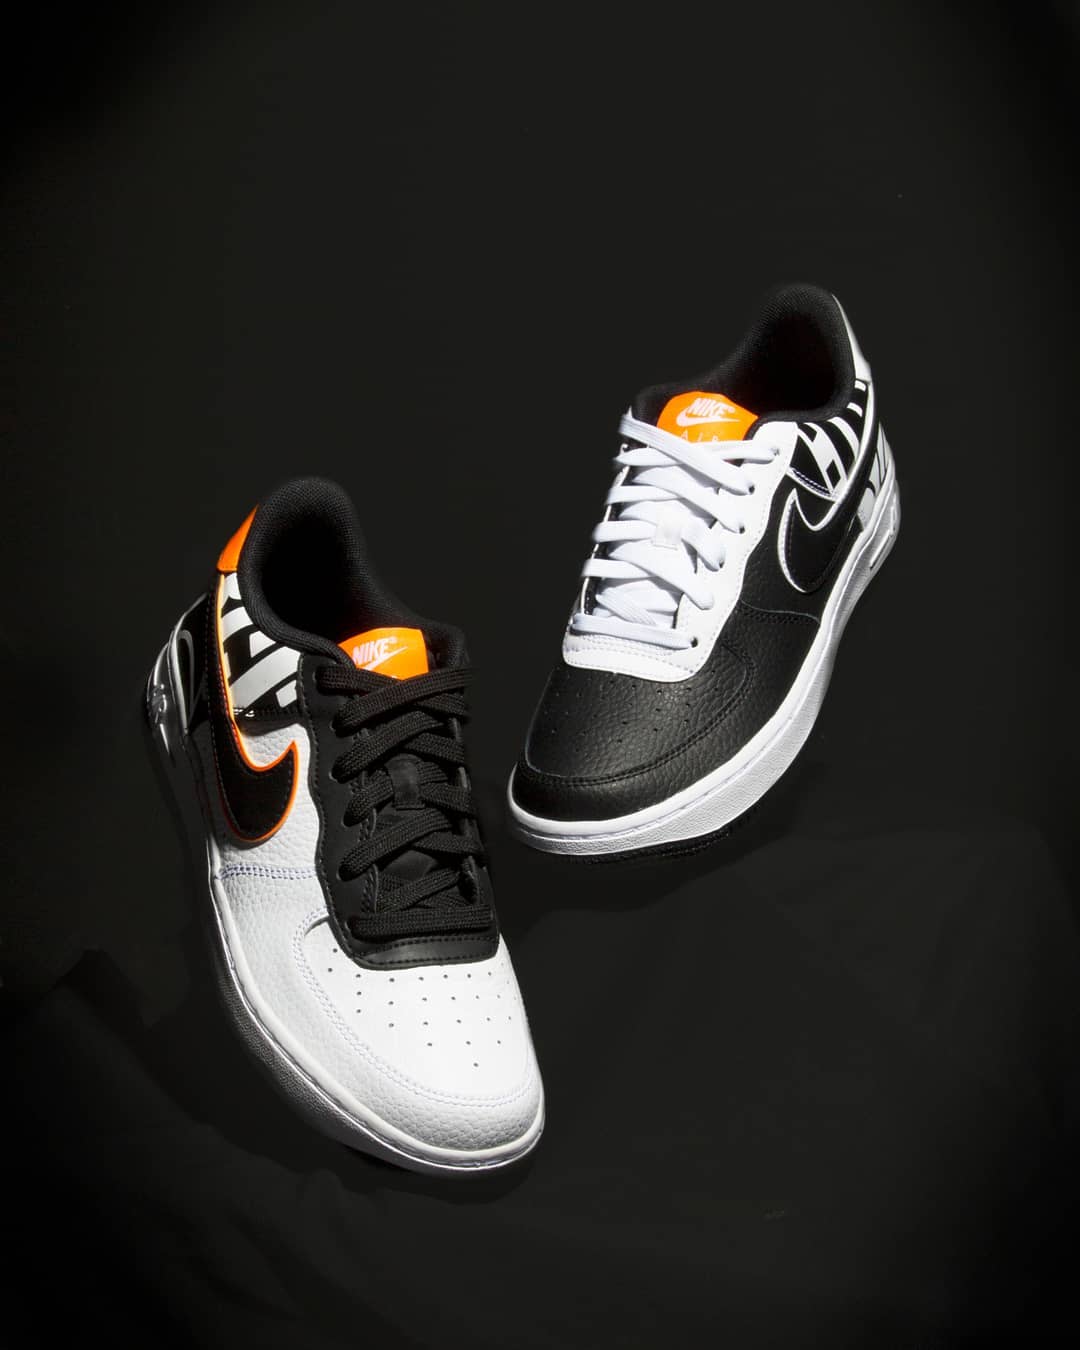 Nike Air Force 1 07 LV8
White / Black / Orange